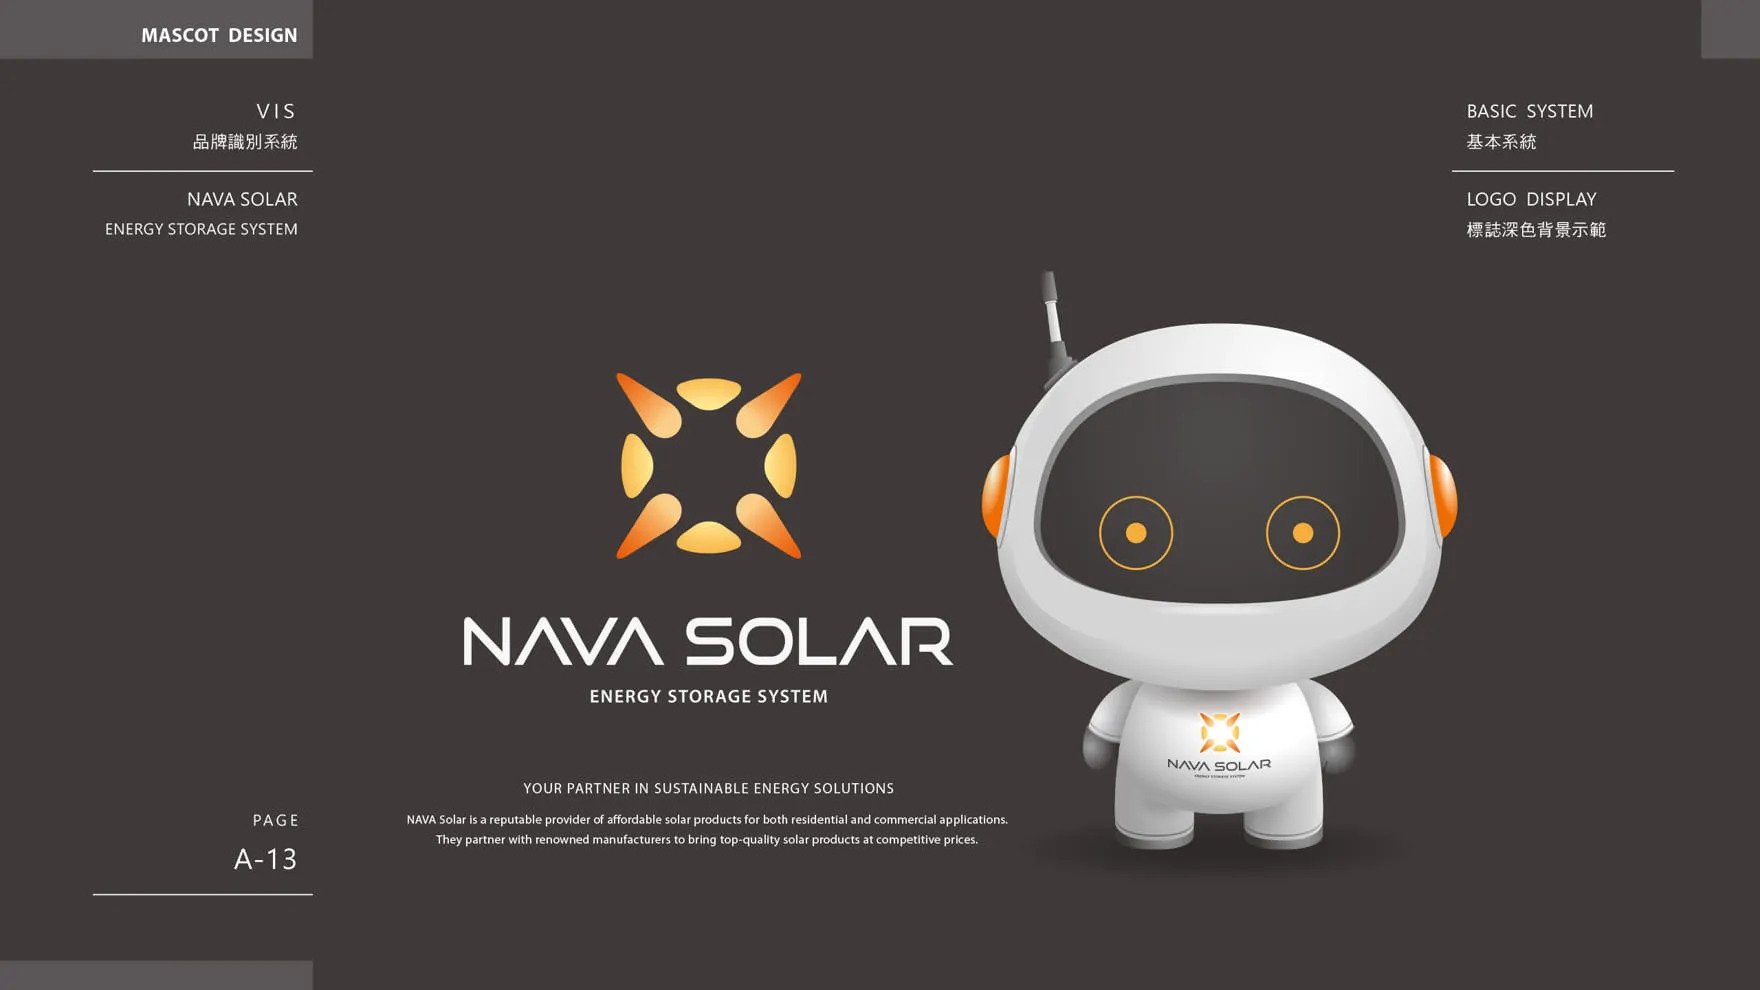 NAVA SOLAR 太陽能光電存儲LOGO品牌吉祥物 Mascot Dark Background Display